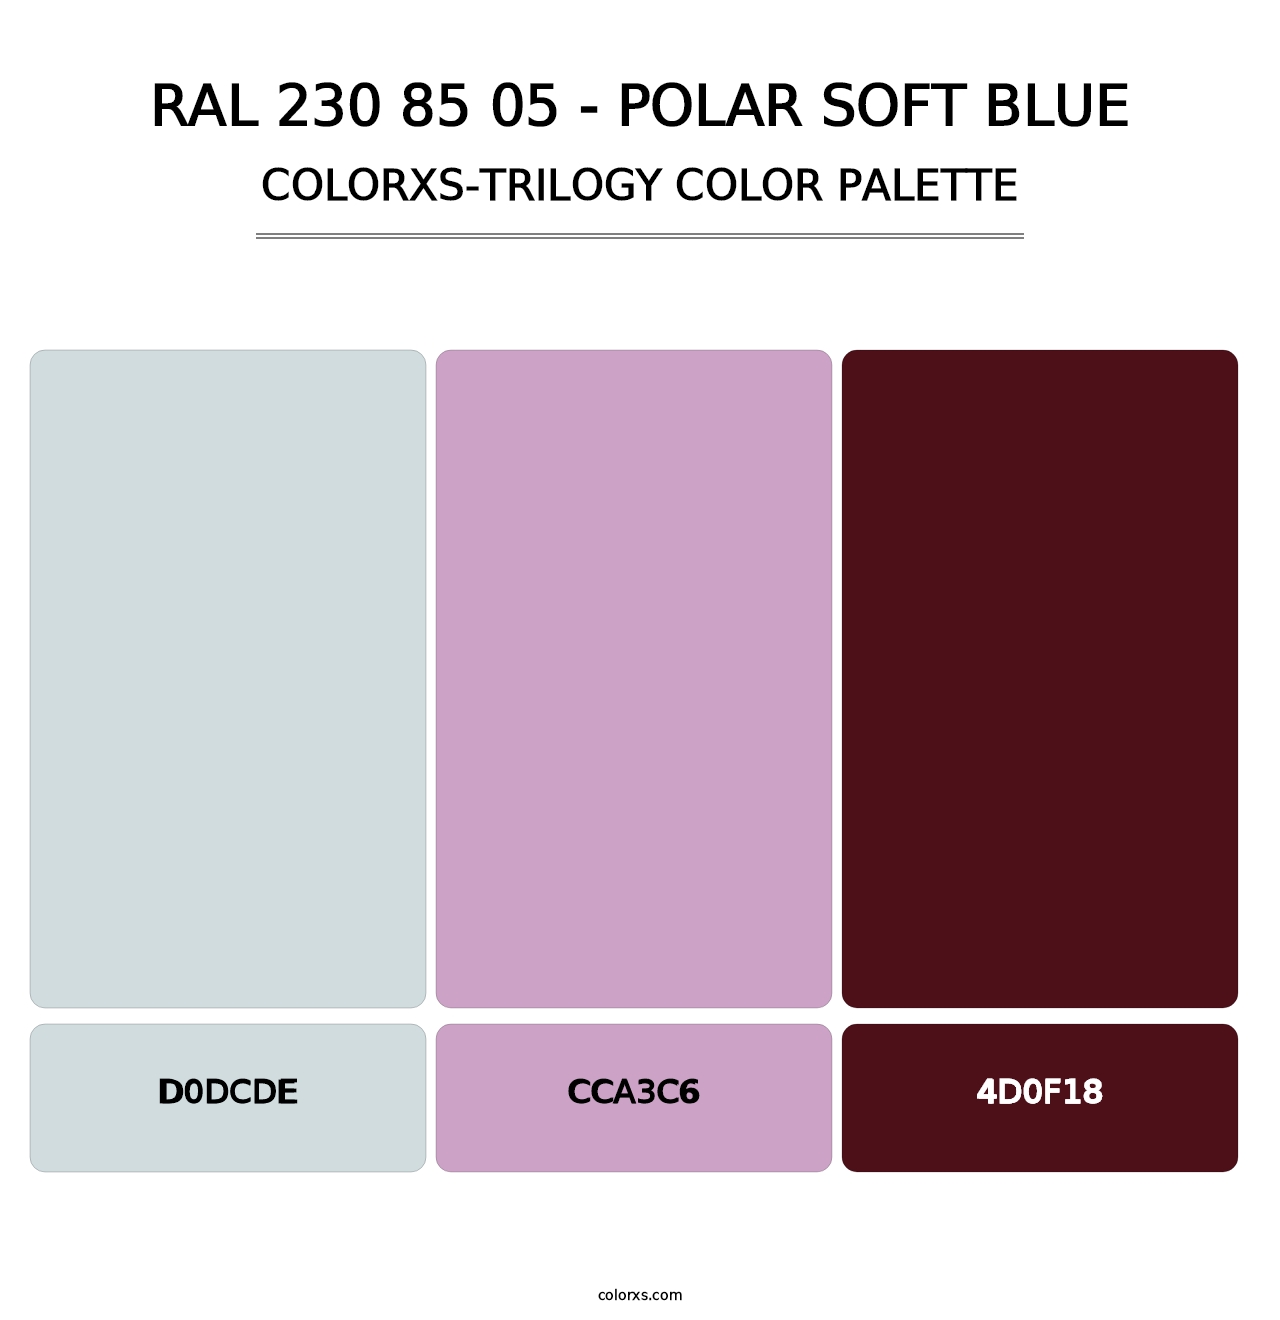 RAL 230 85 05 - Polar Soft Blue - Colorxs Trilogy Palette